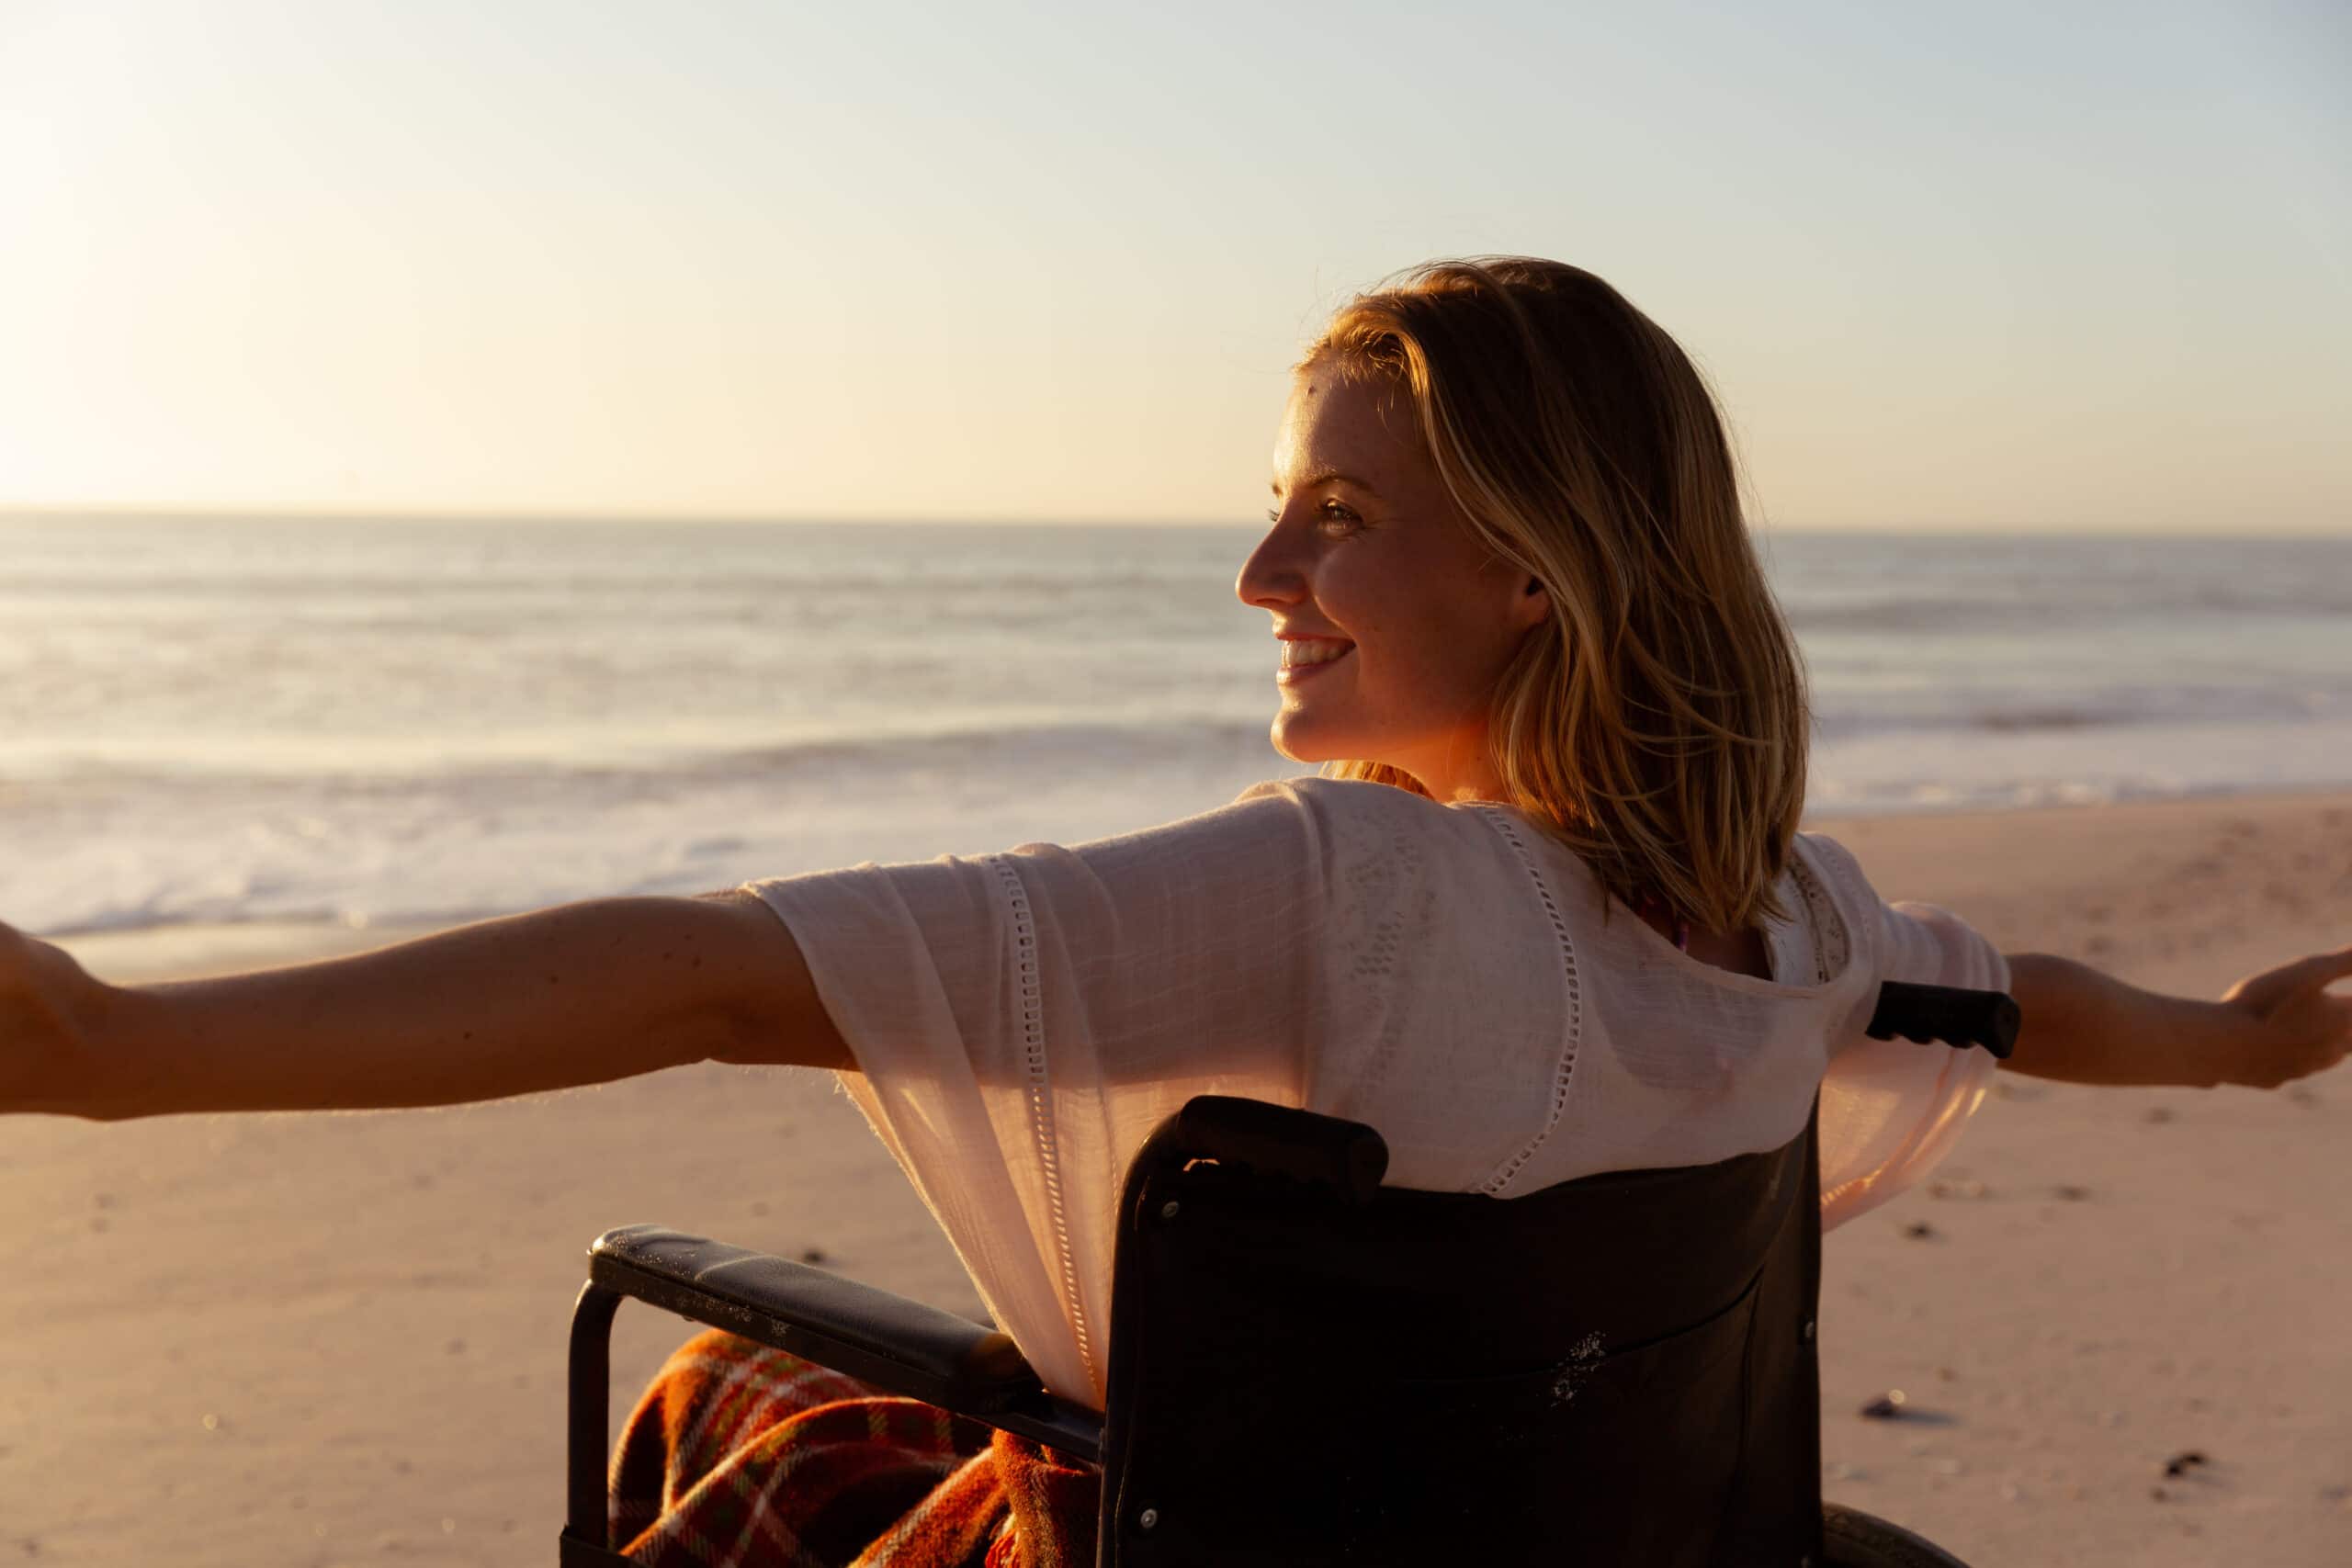 Visit the beach in wheelchair